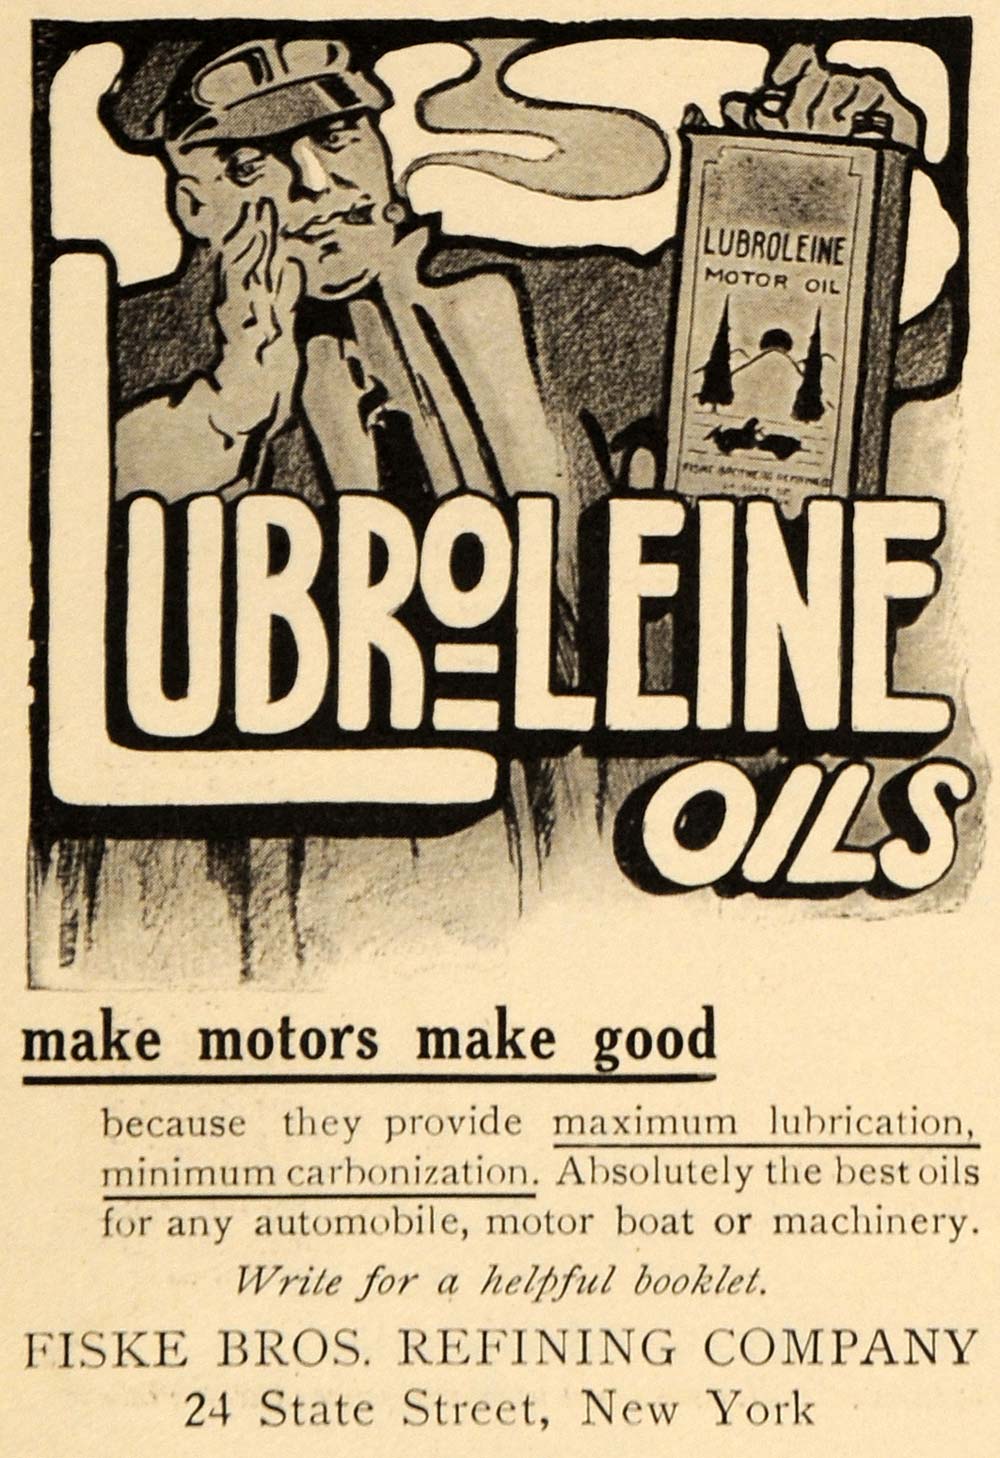 1909 Ad Fiske Bros Refining Co Lubroleine Motor Oils - ORIGINAL ADVERTISING EM2